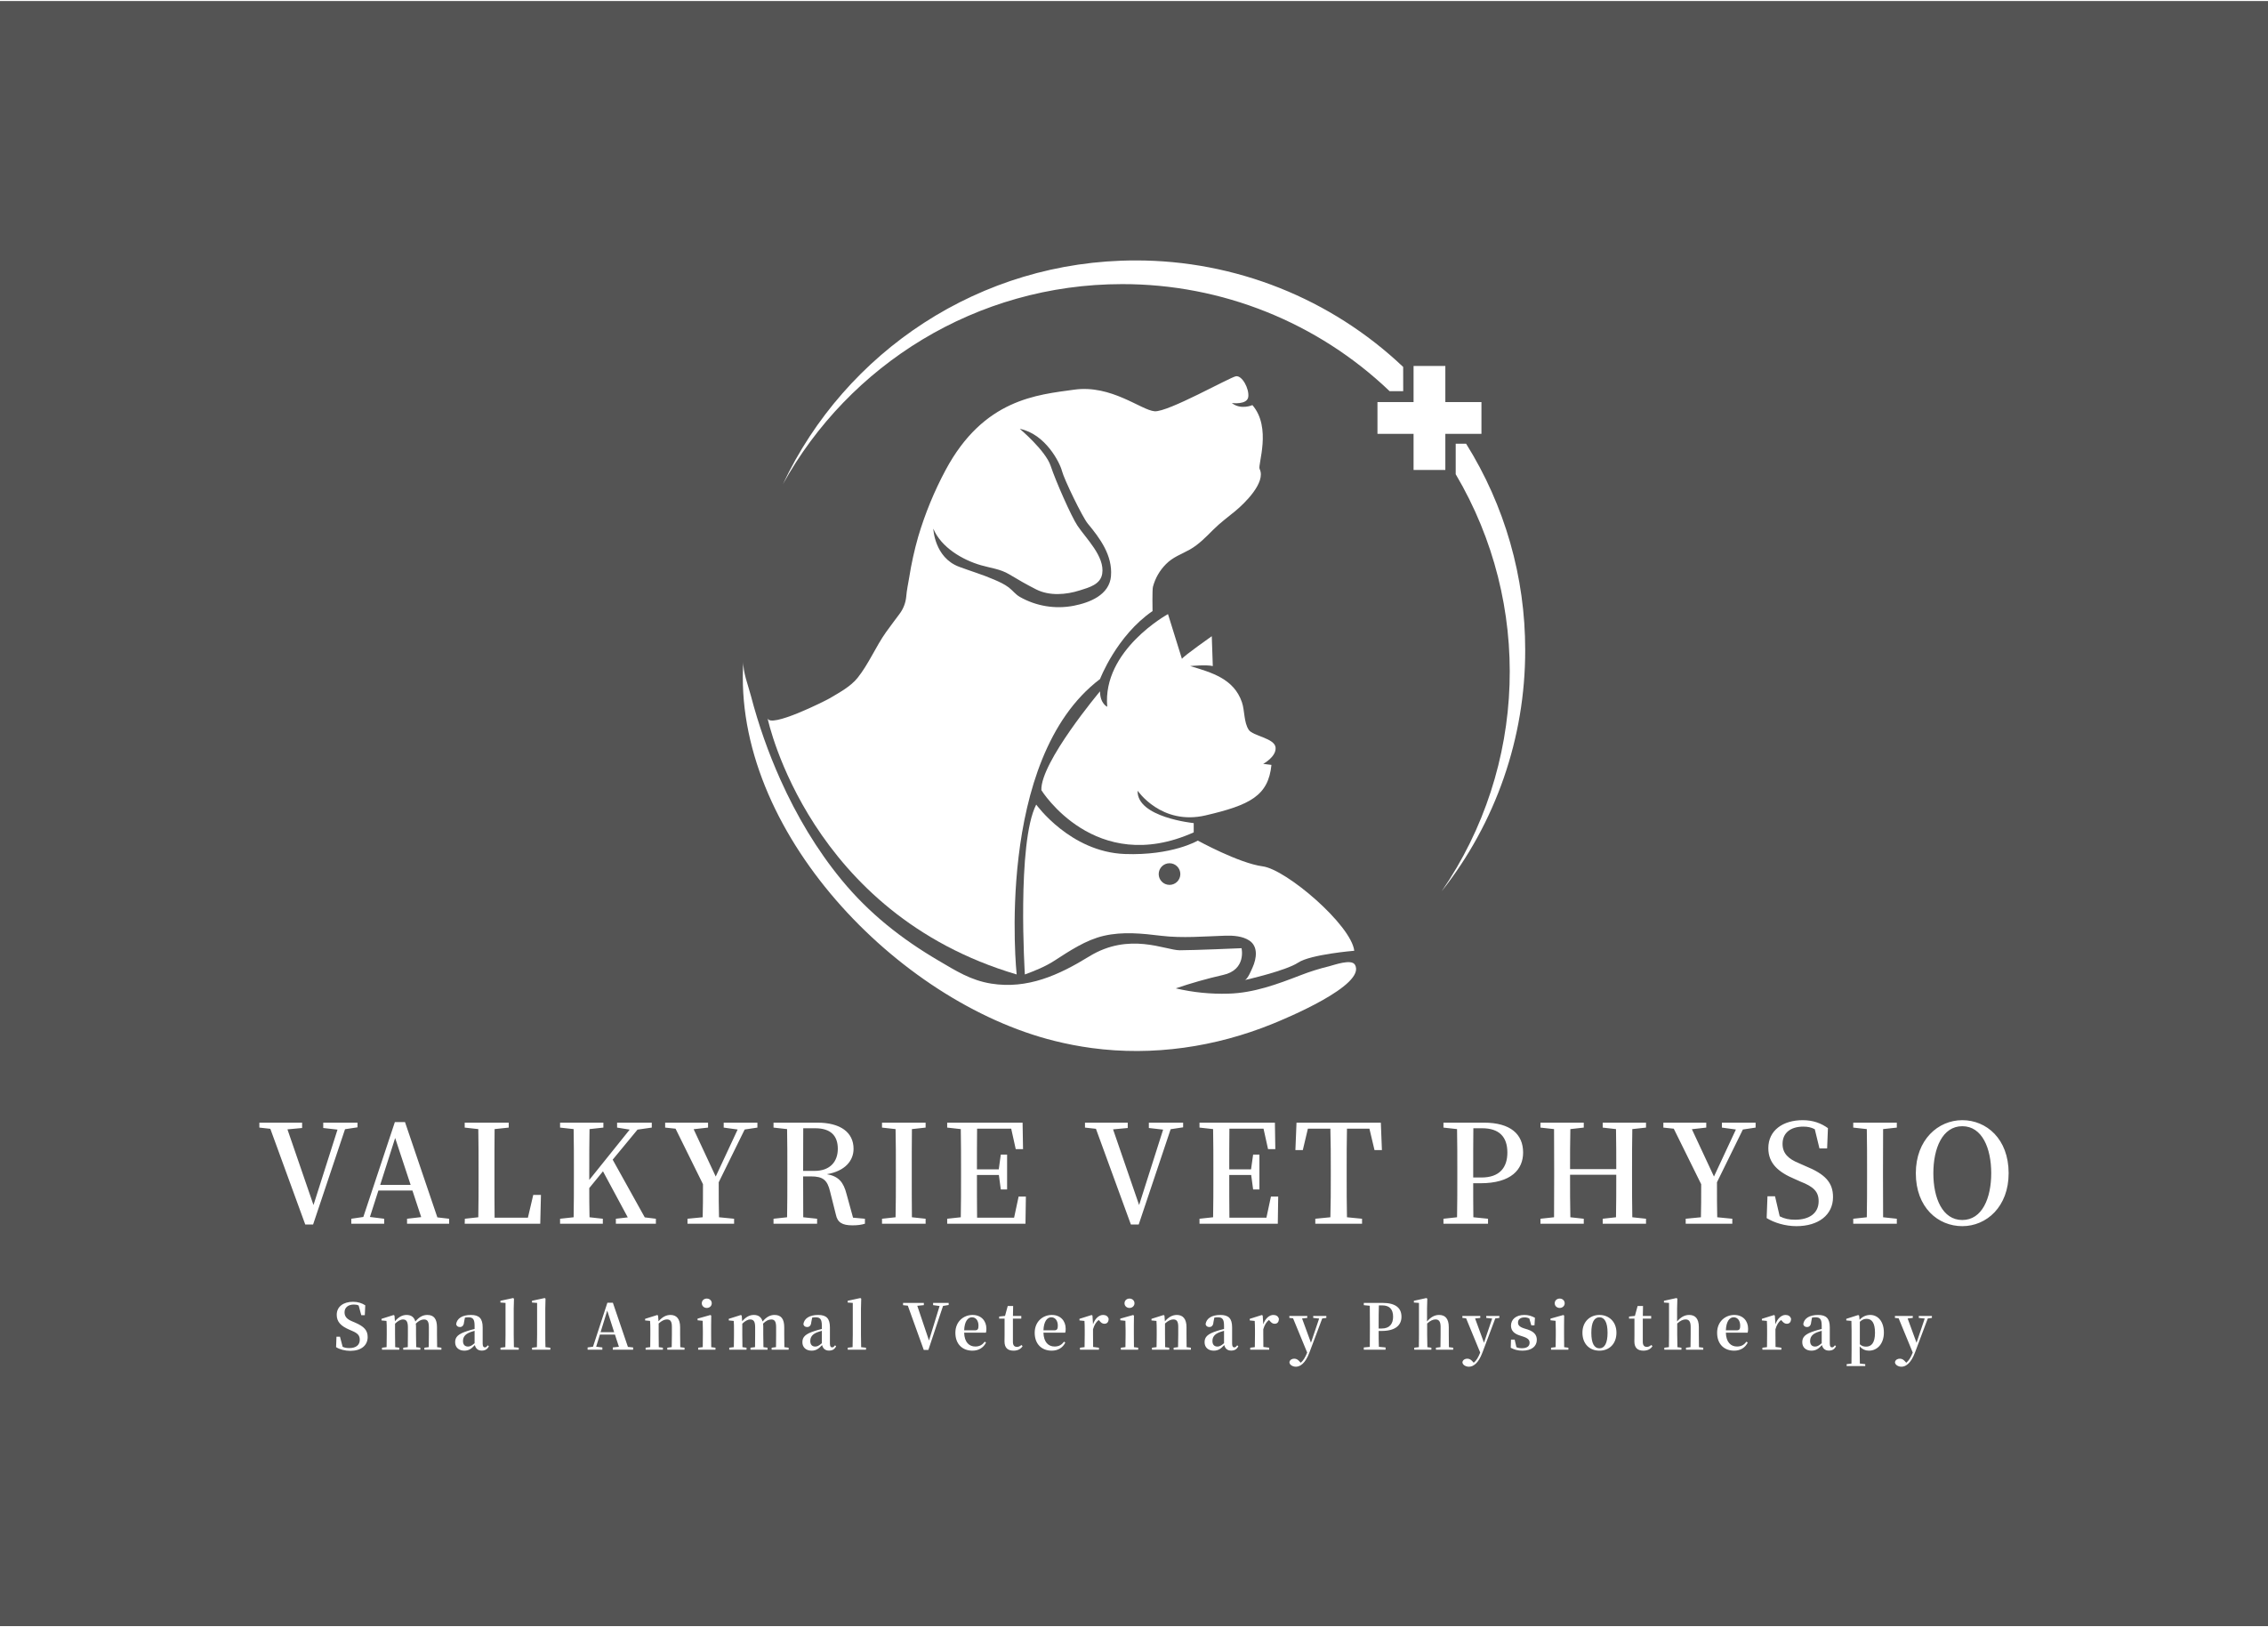 Valkyrie Veterinary Physiotherapy